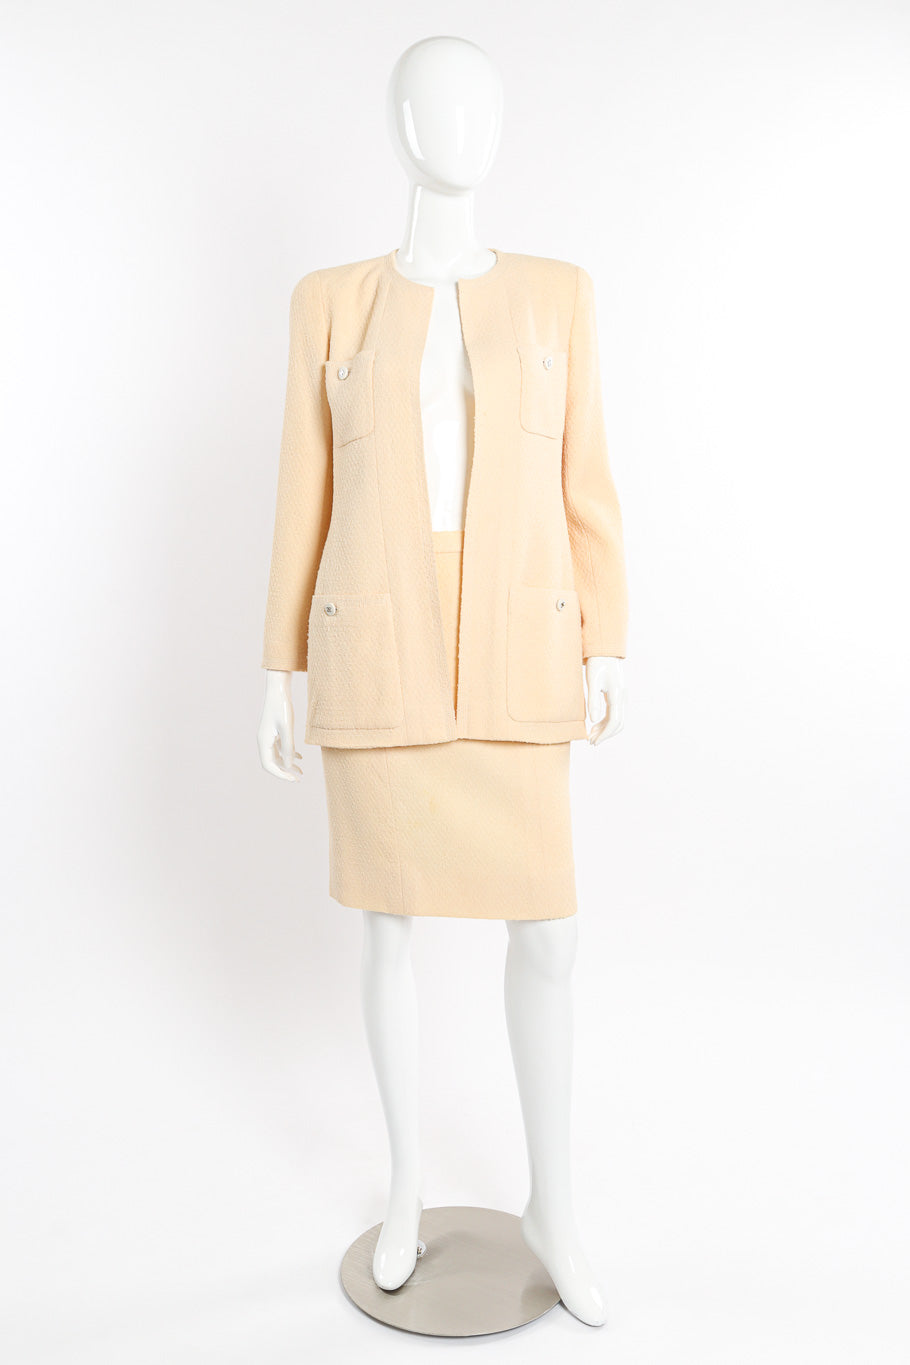 Chanel Knit Bouclé Jacket and Skirt Set front on mannequin @recessla